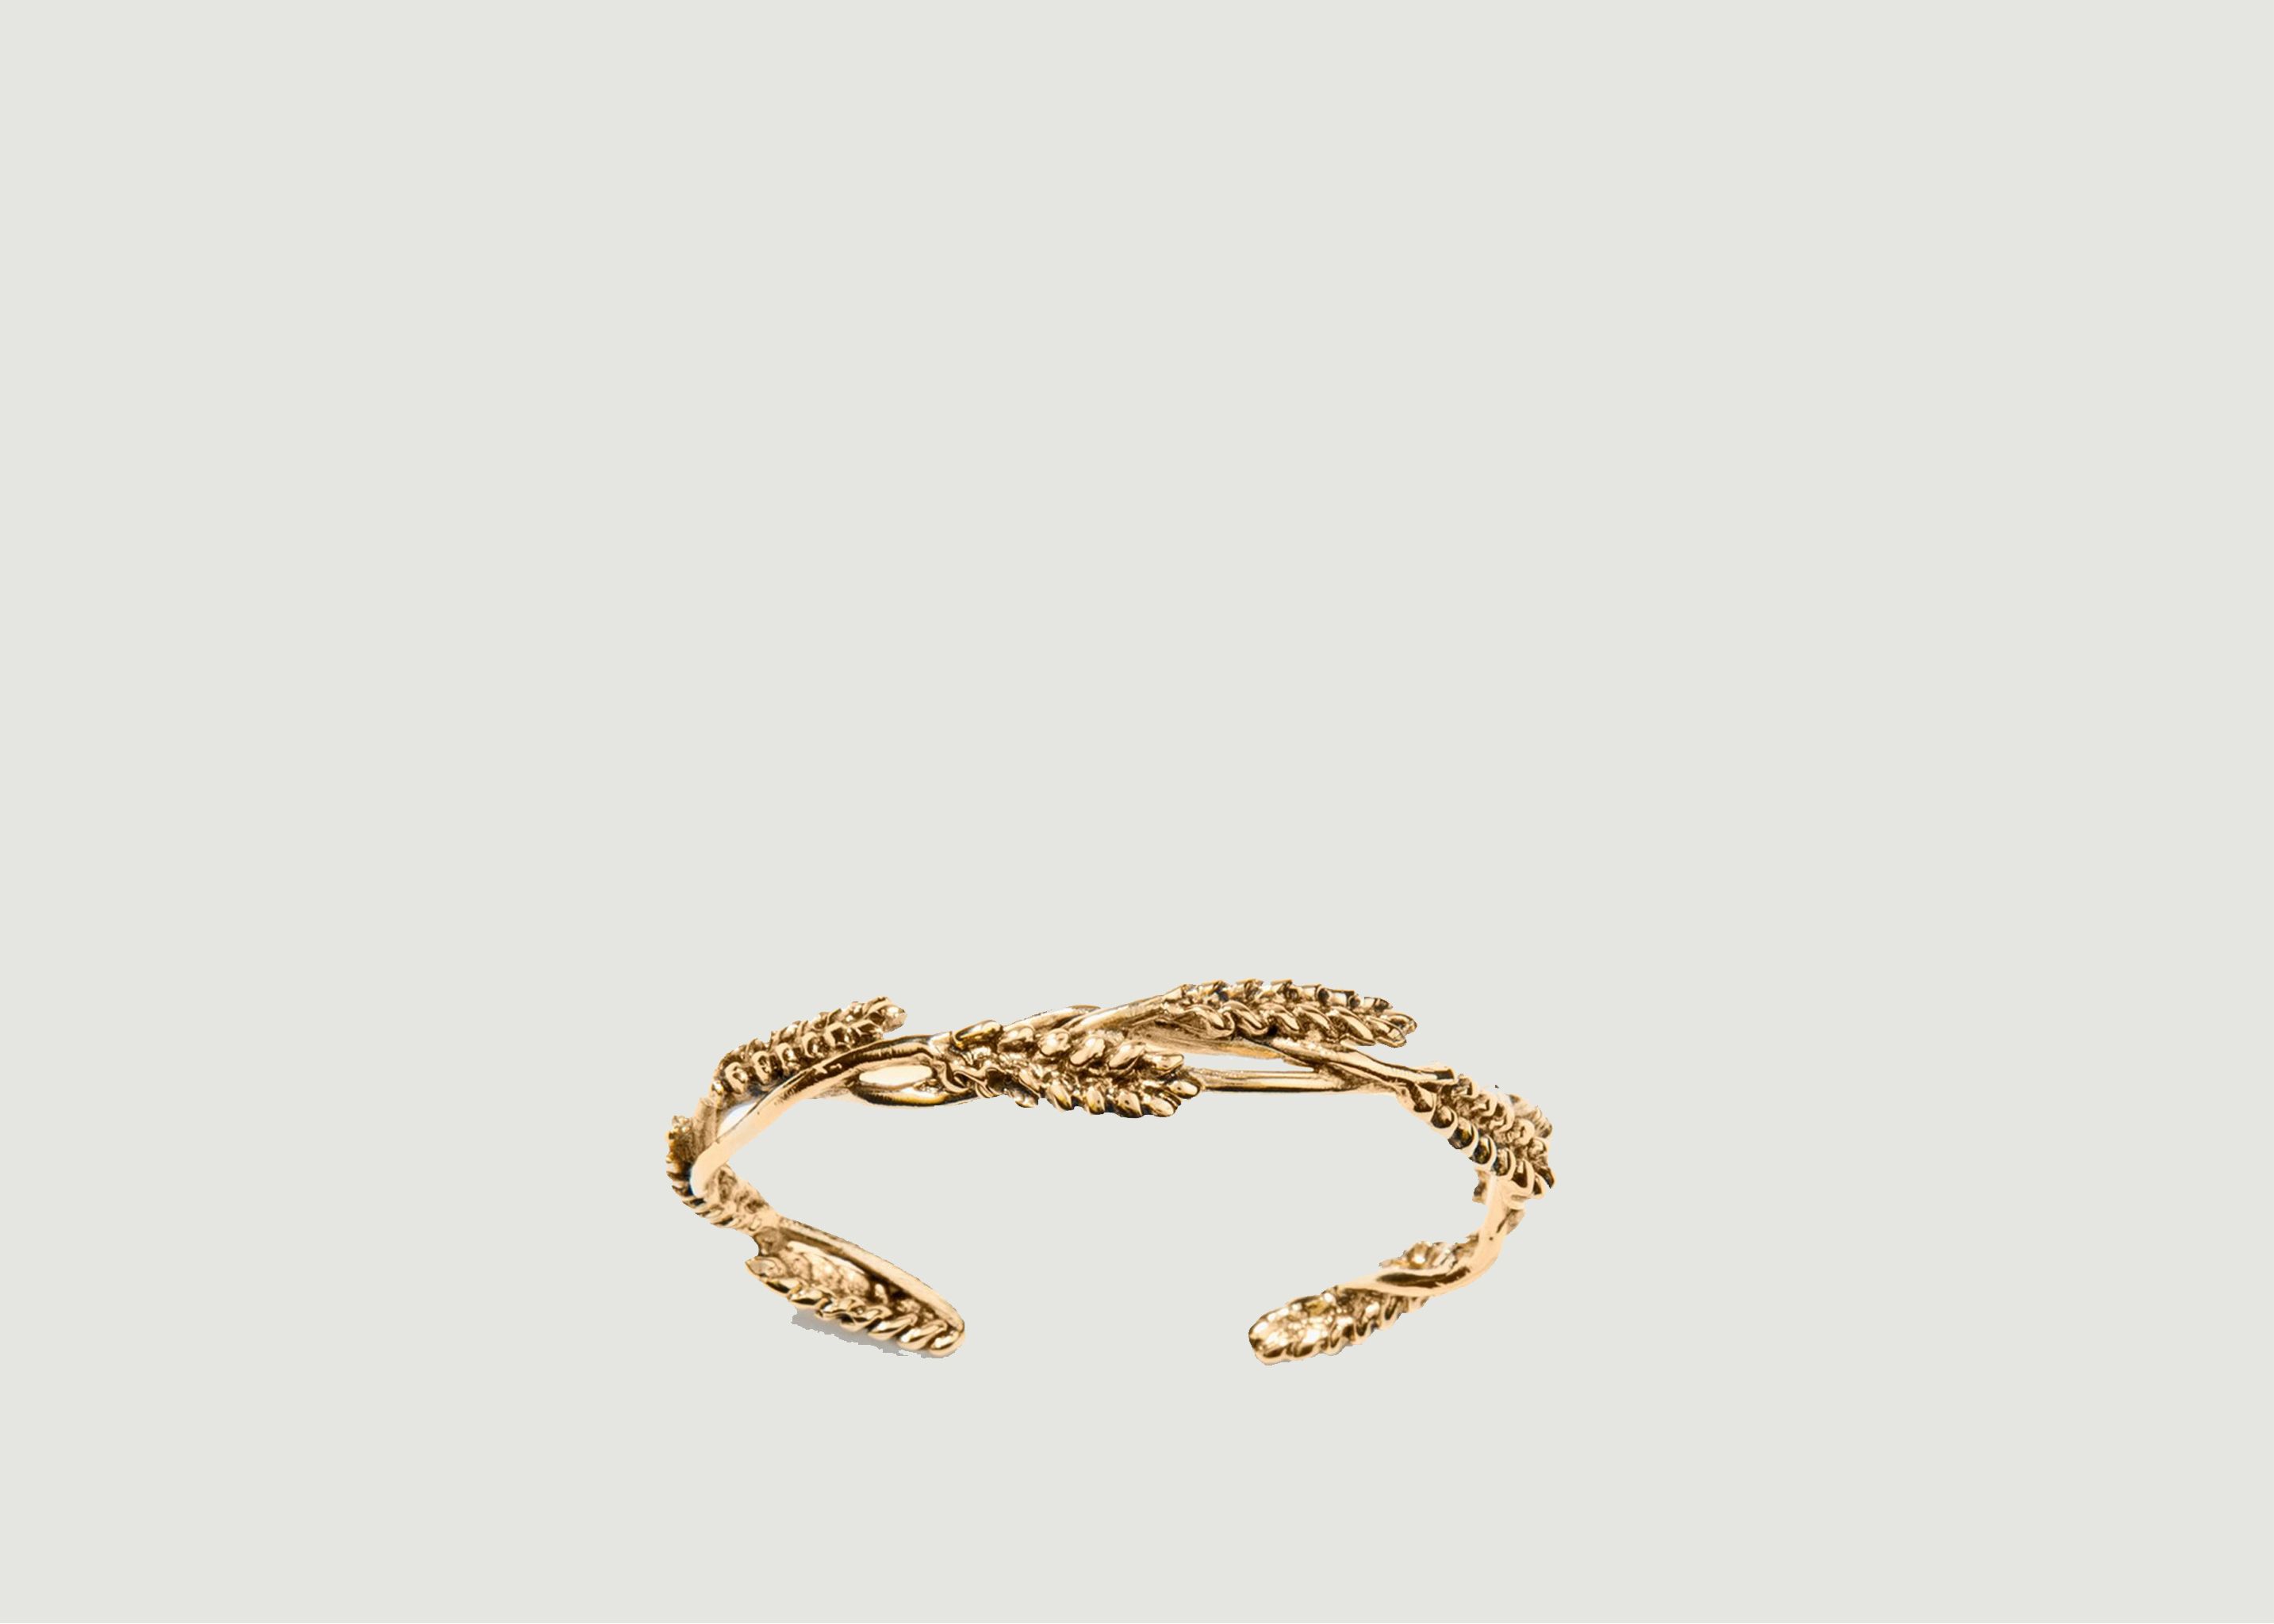 Blé gold plated bangle bracelet - Aurélie Bidermann